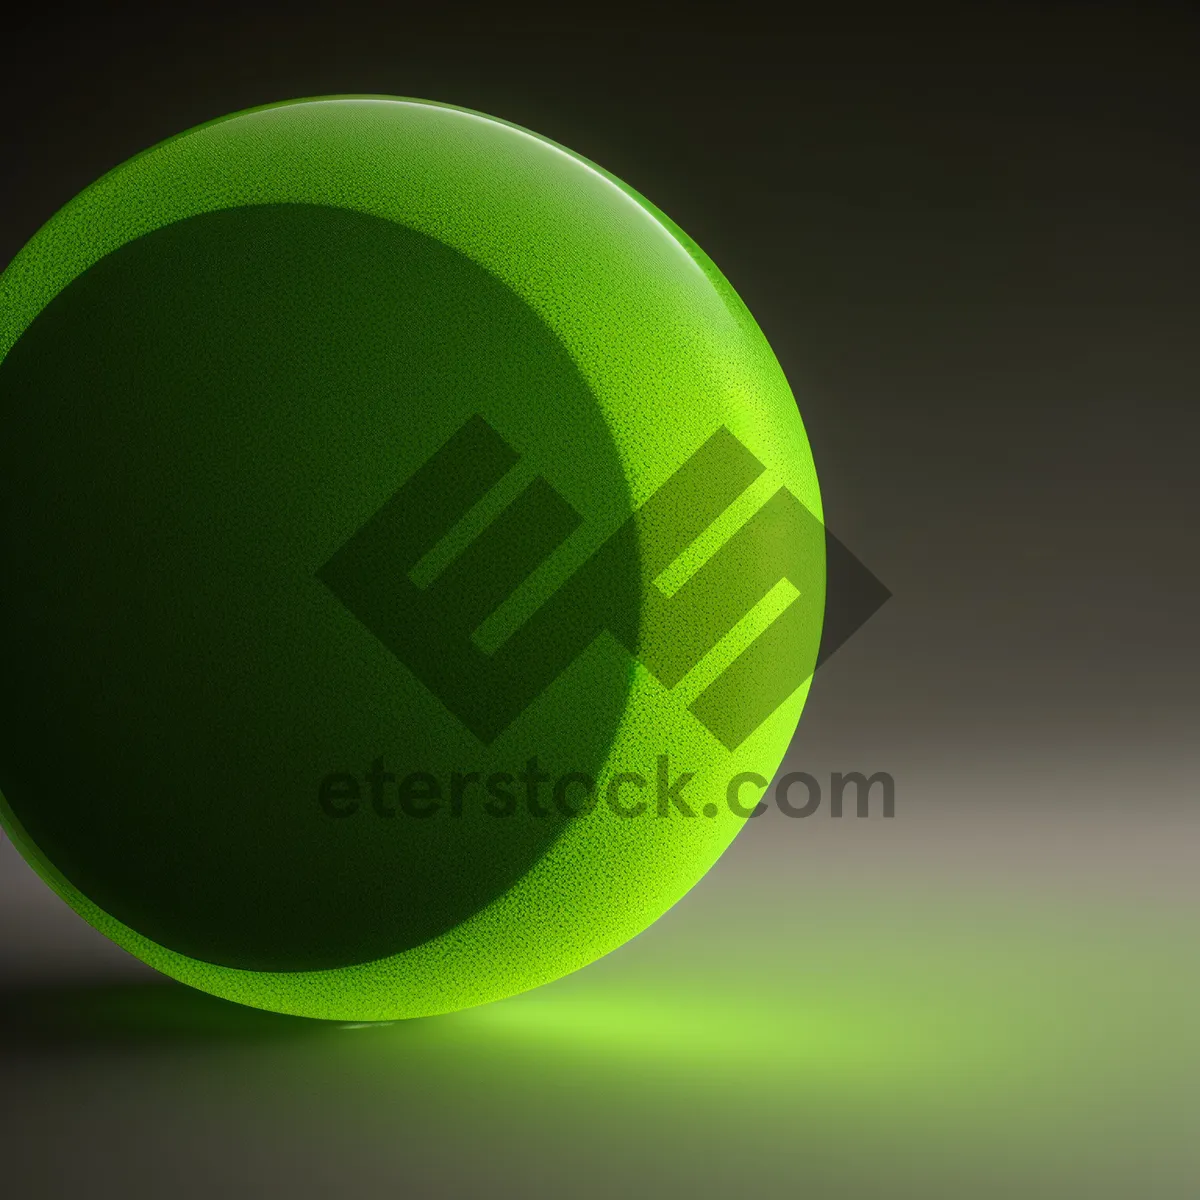 Picture of Bright Graphic Tennis Ball Design